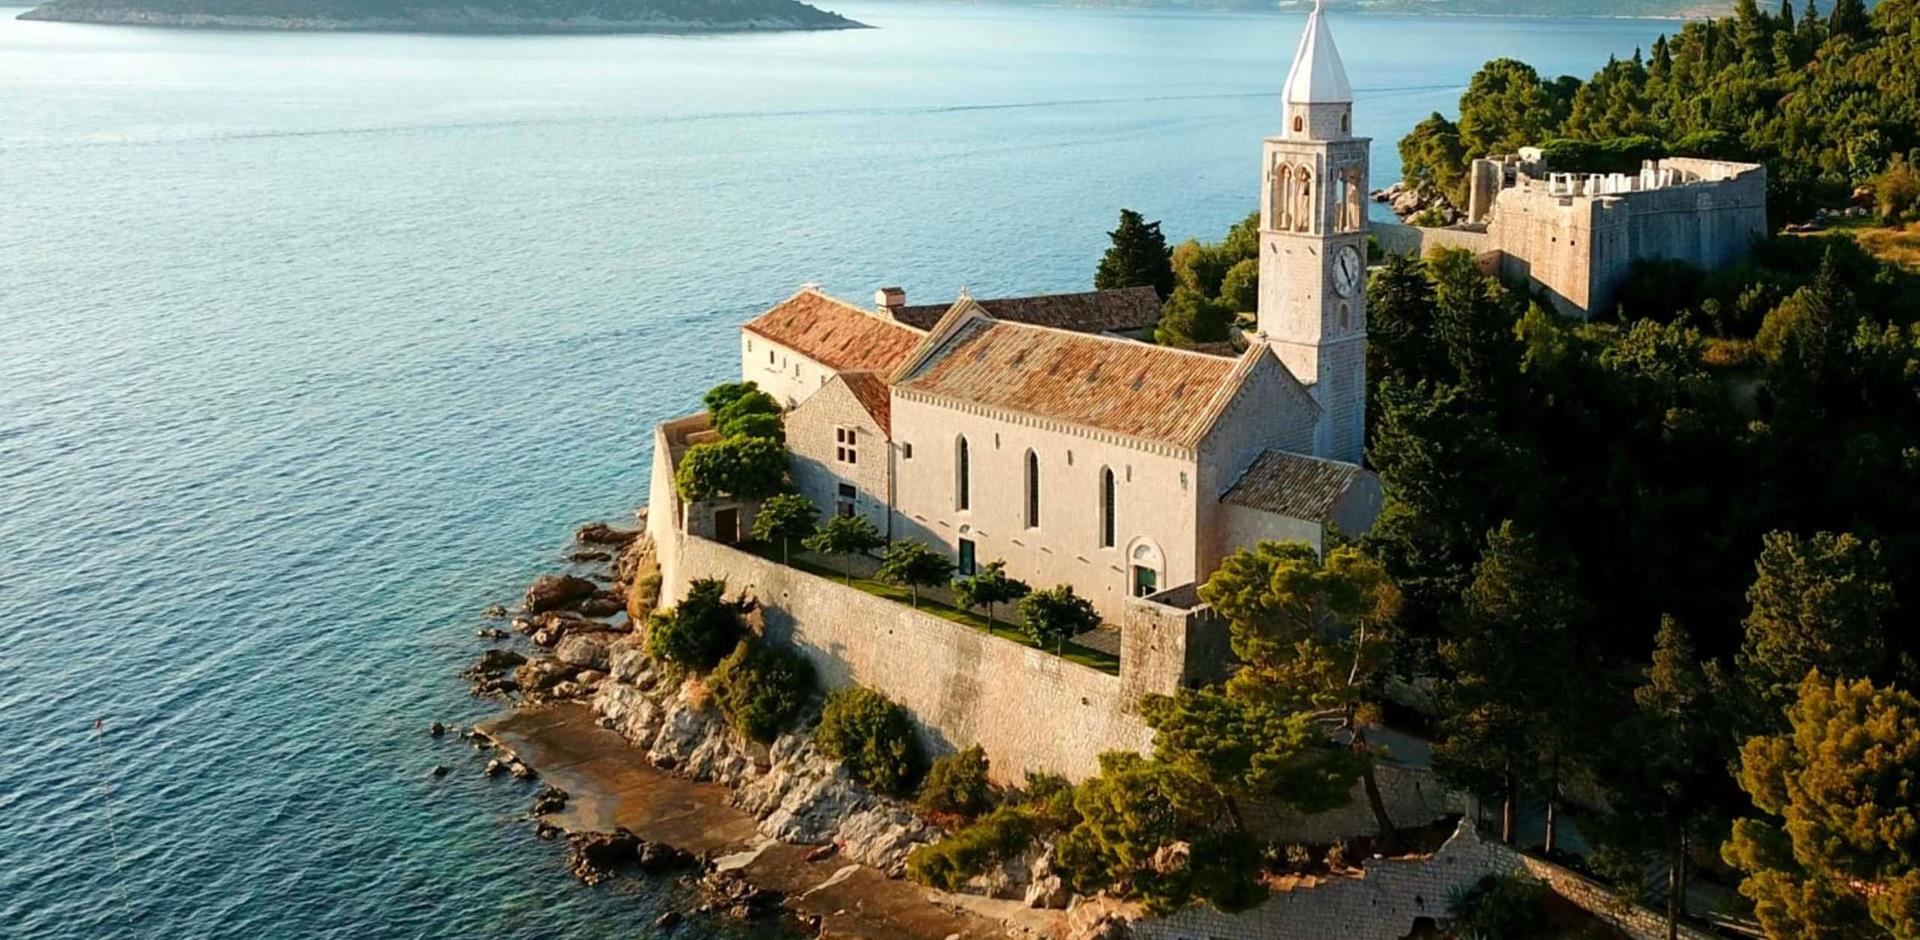 LOPUD 1483, Dubrovnik, Croatia